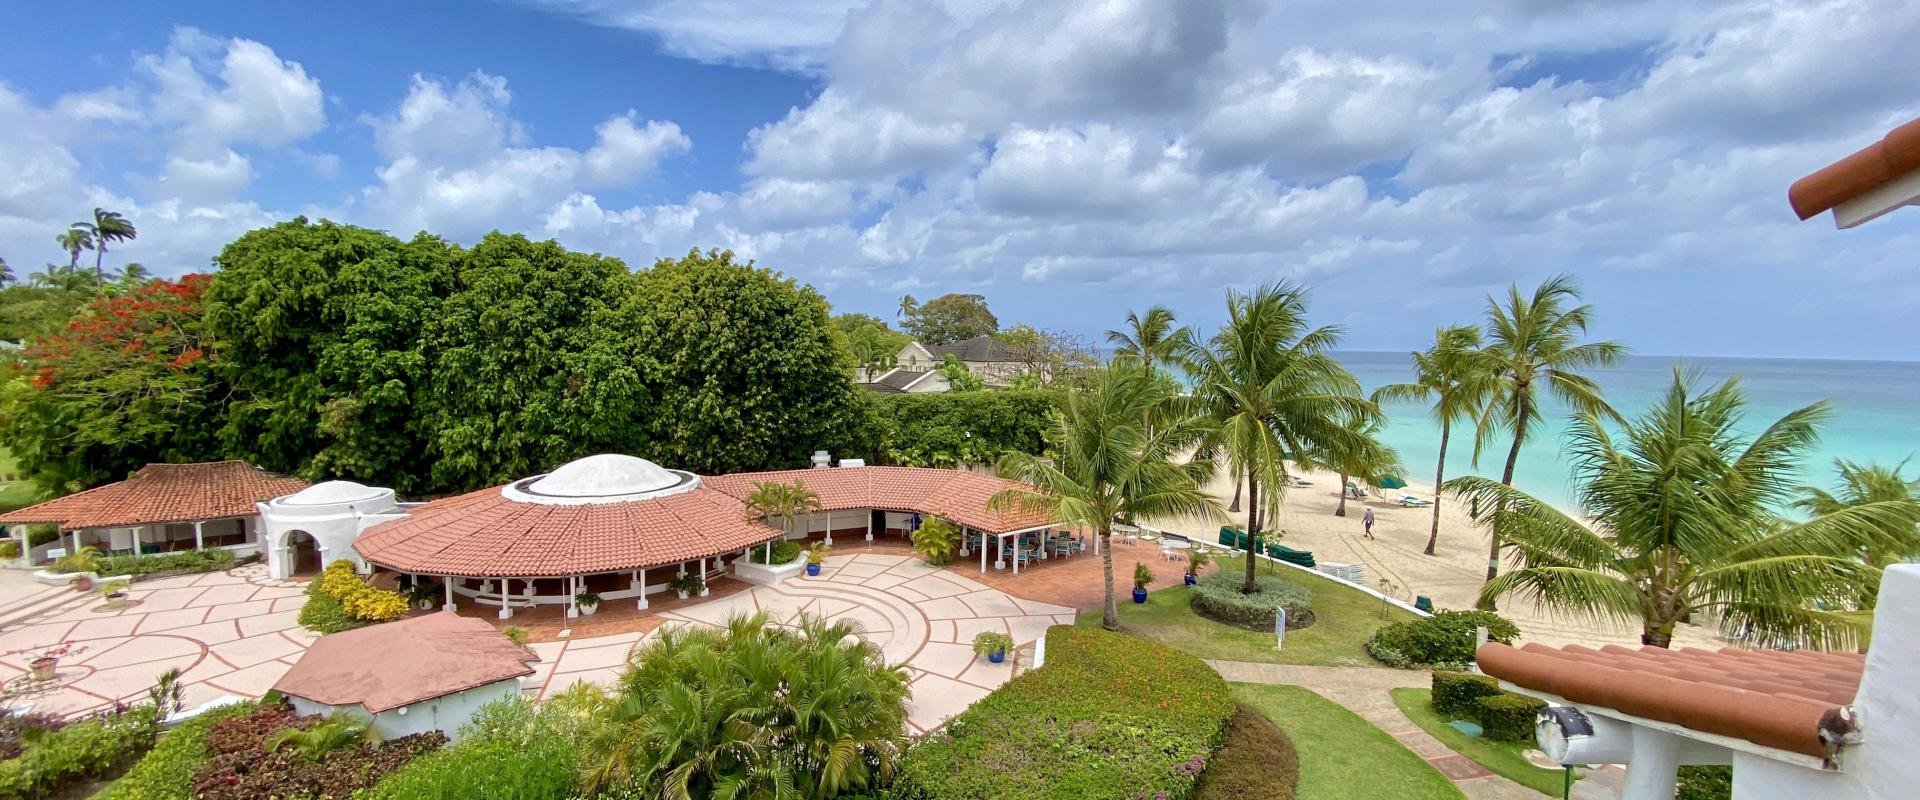 Glitter Bay, 302, Top Deck Condominium/Apartment For Rent in Barbados